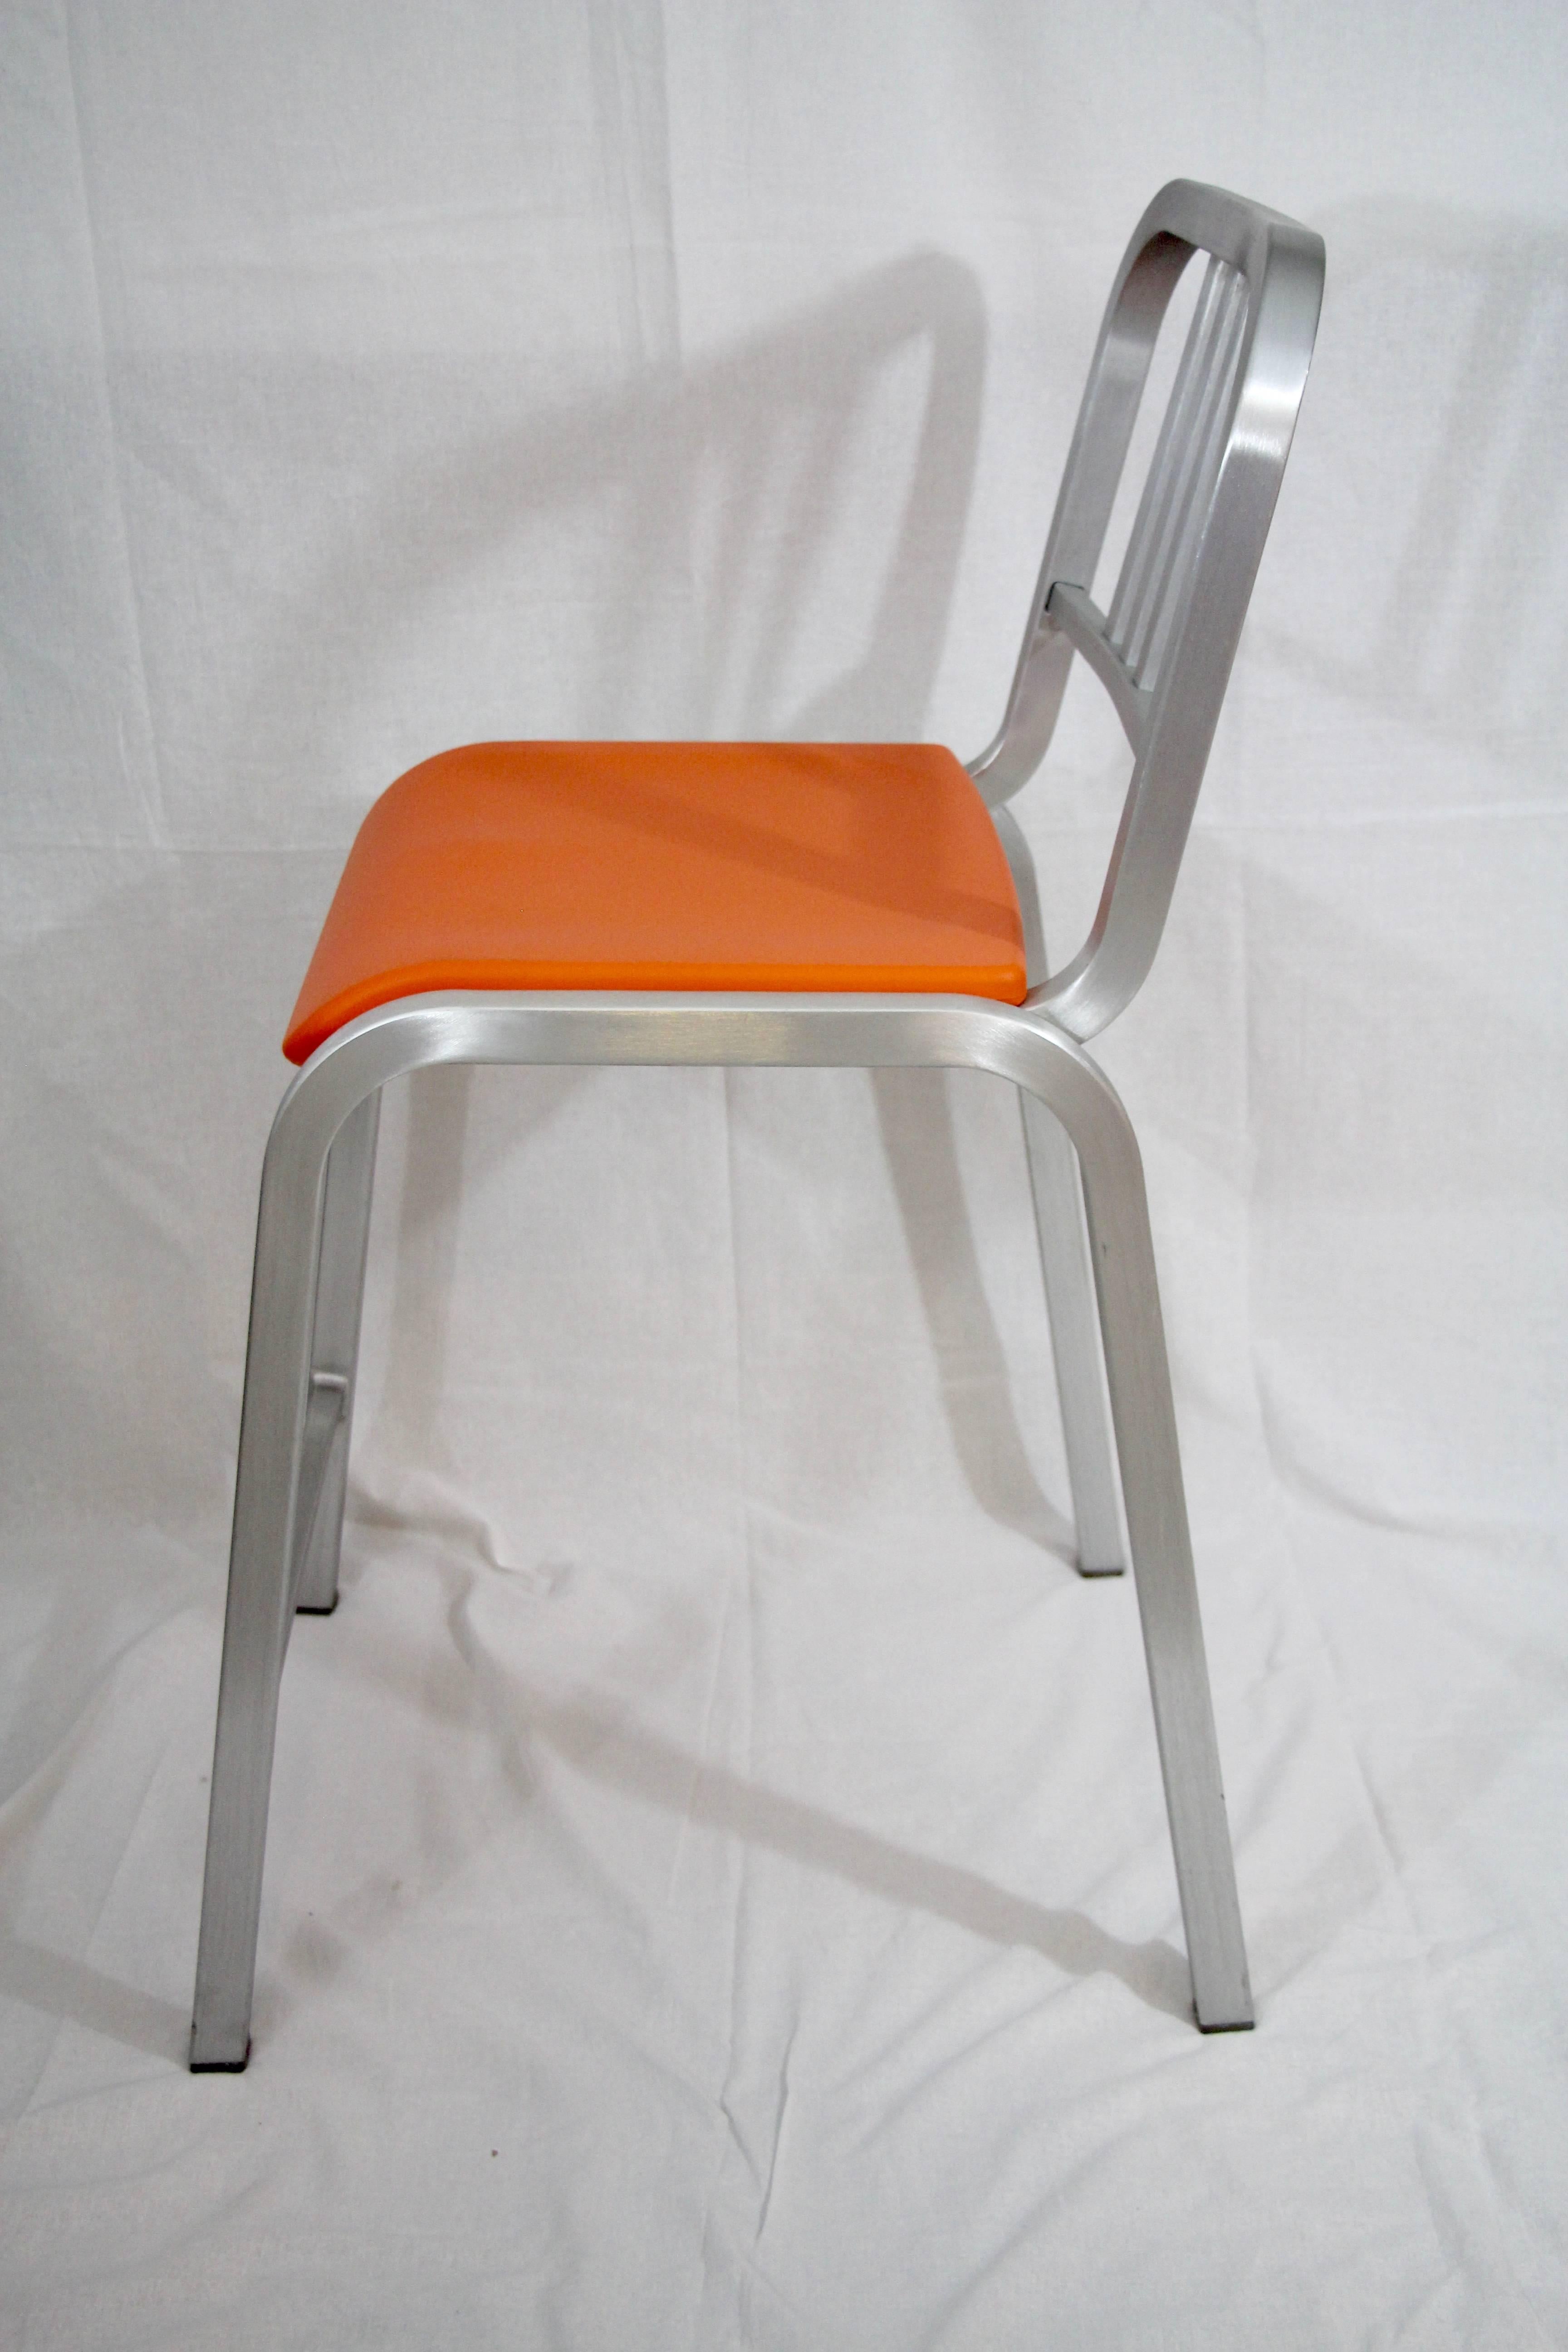 Pair of Emeco bar stools designed by Ettore Sottsass (1917-2007), brushed aluminum with orange plastic seats.